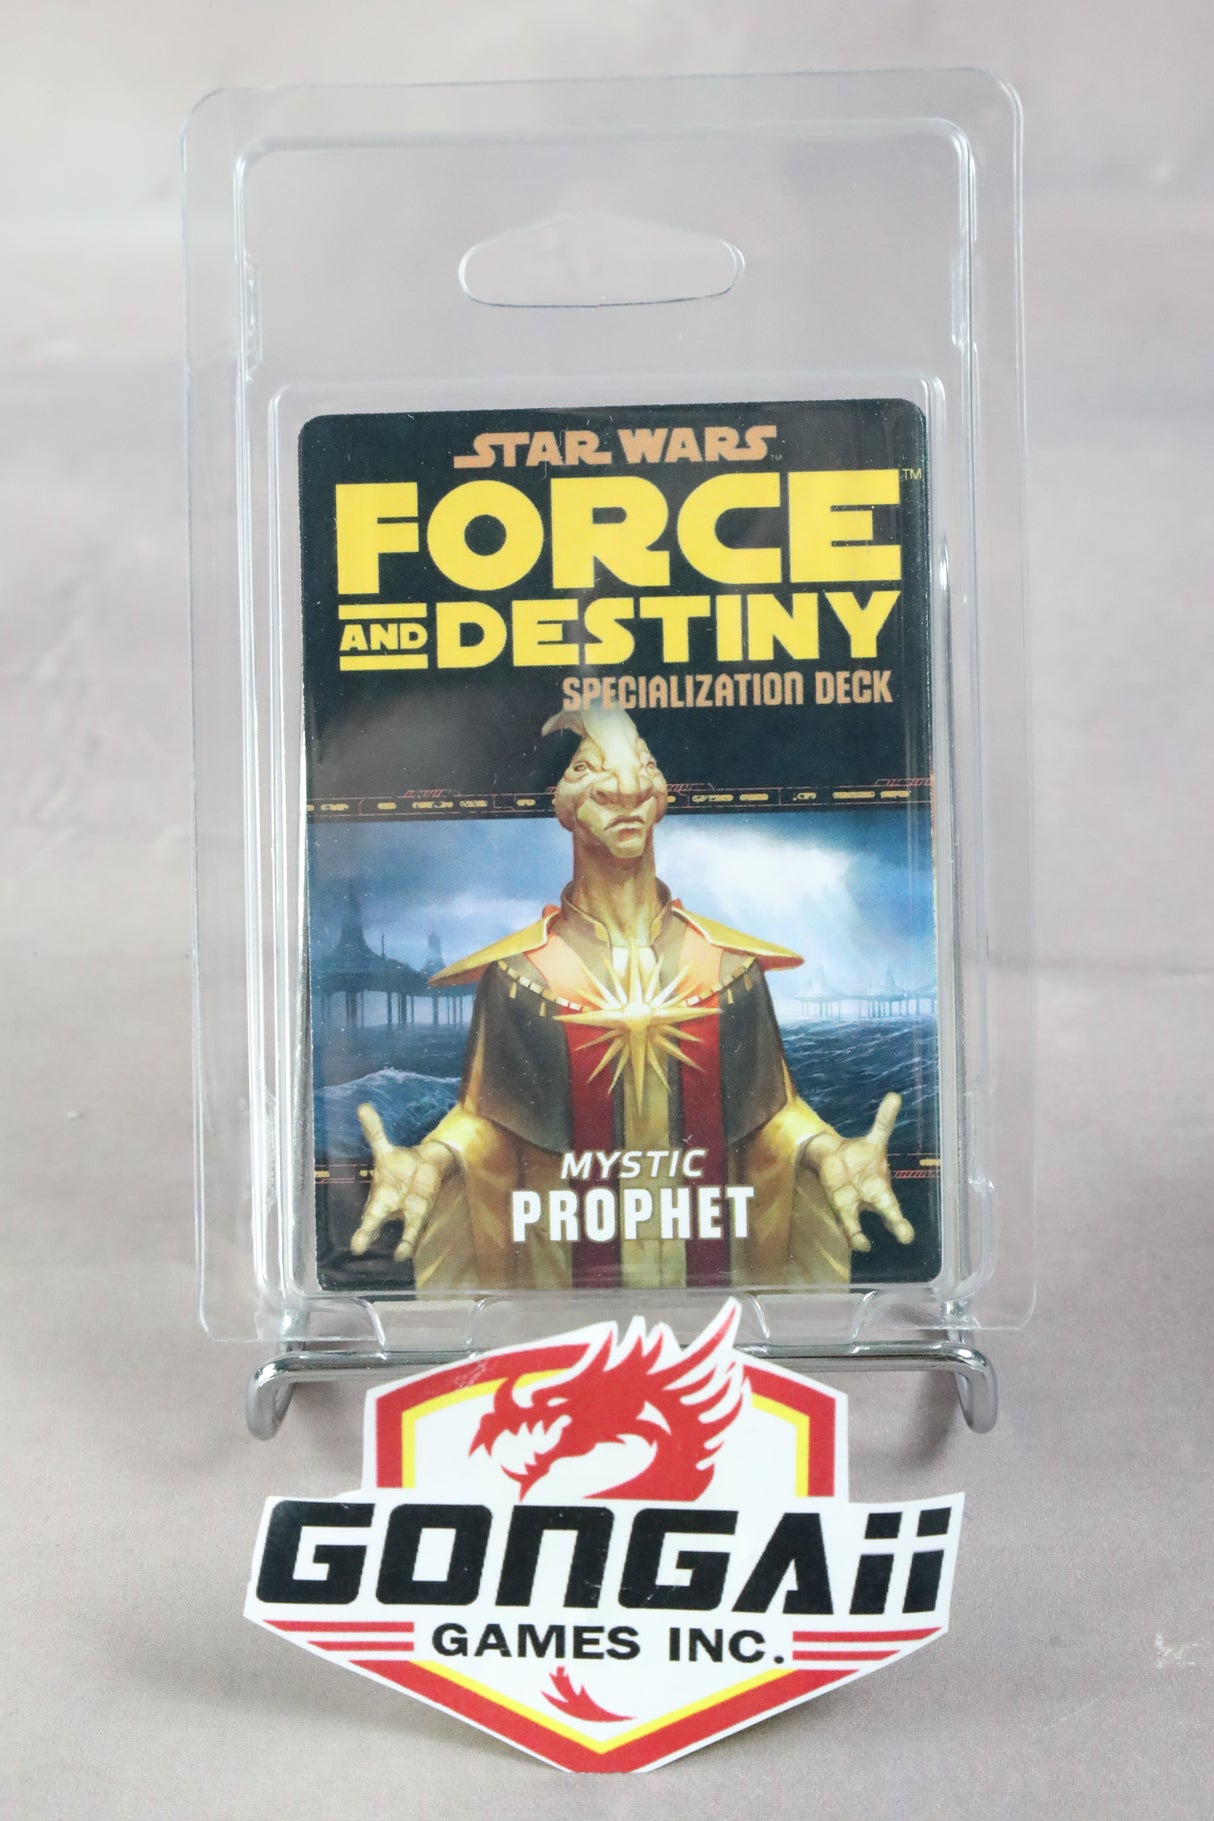 Star Wars RPG: Force and Destiny - Mystic Prophet Specialization Deck